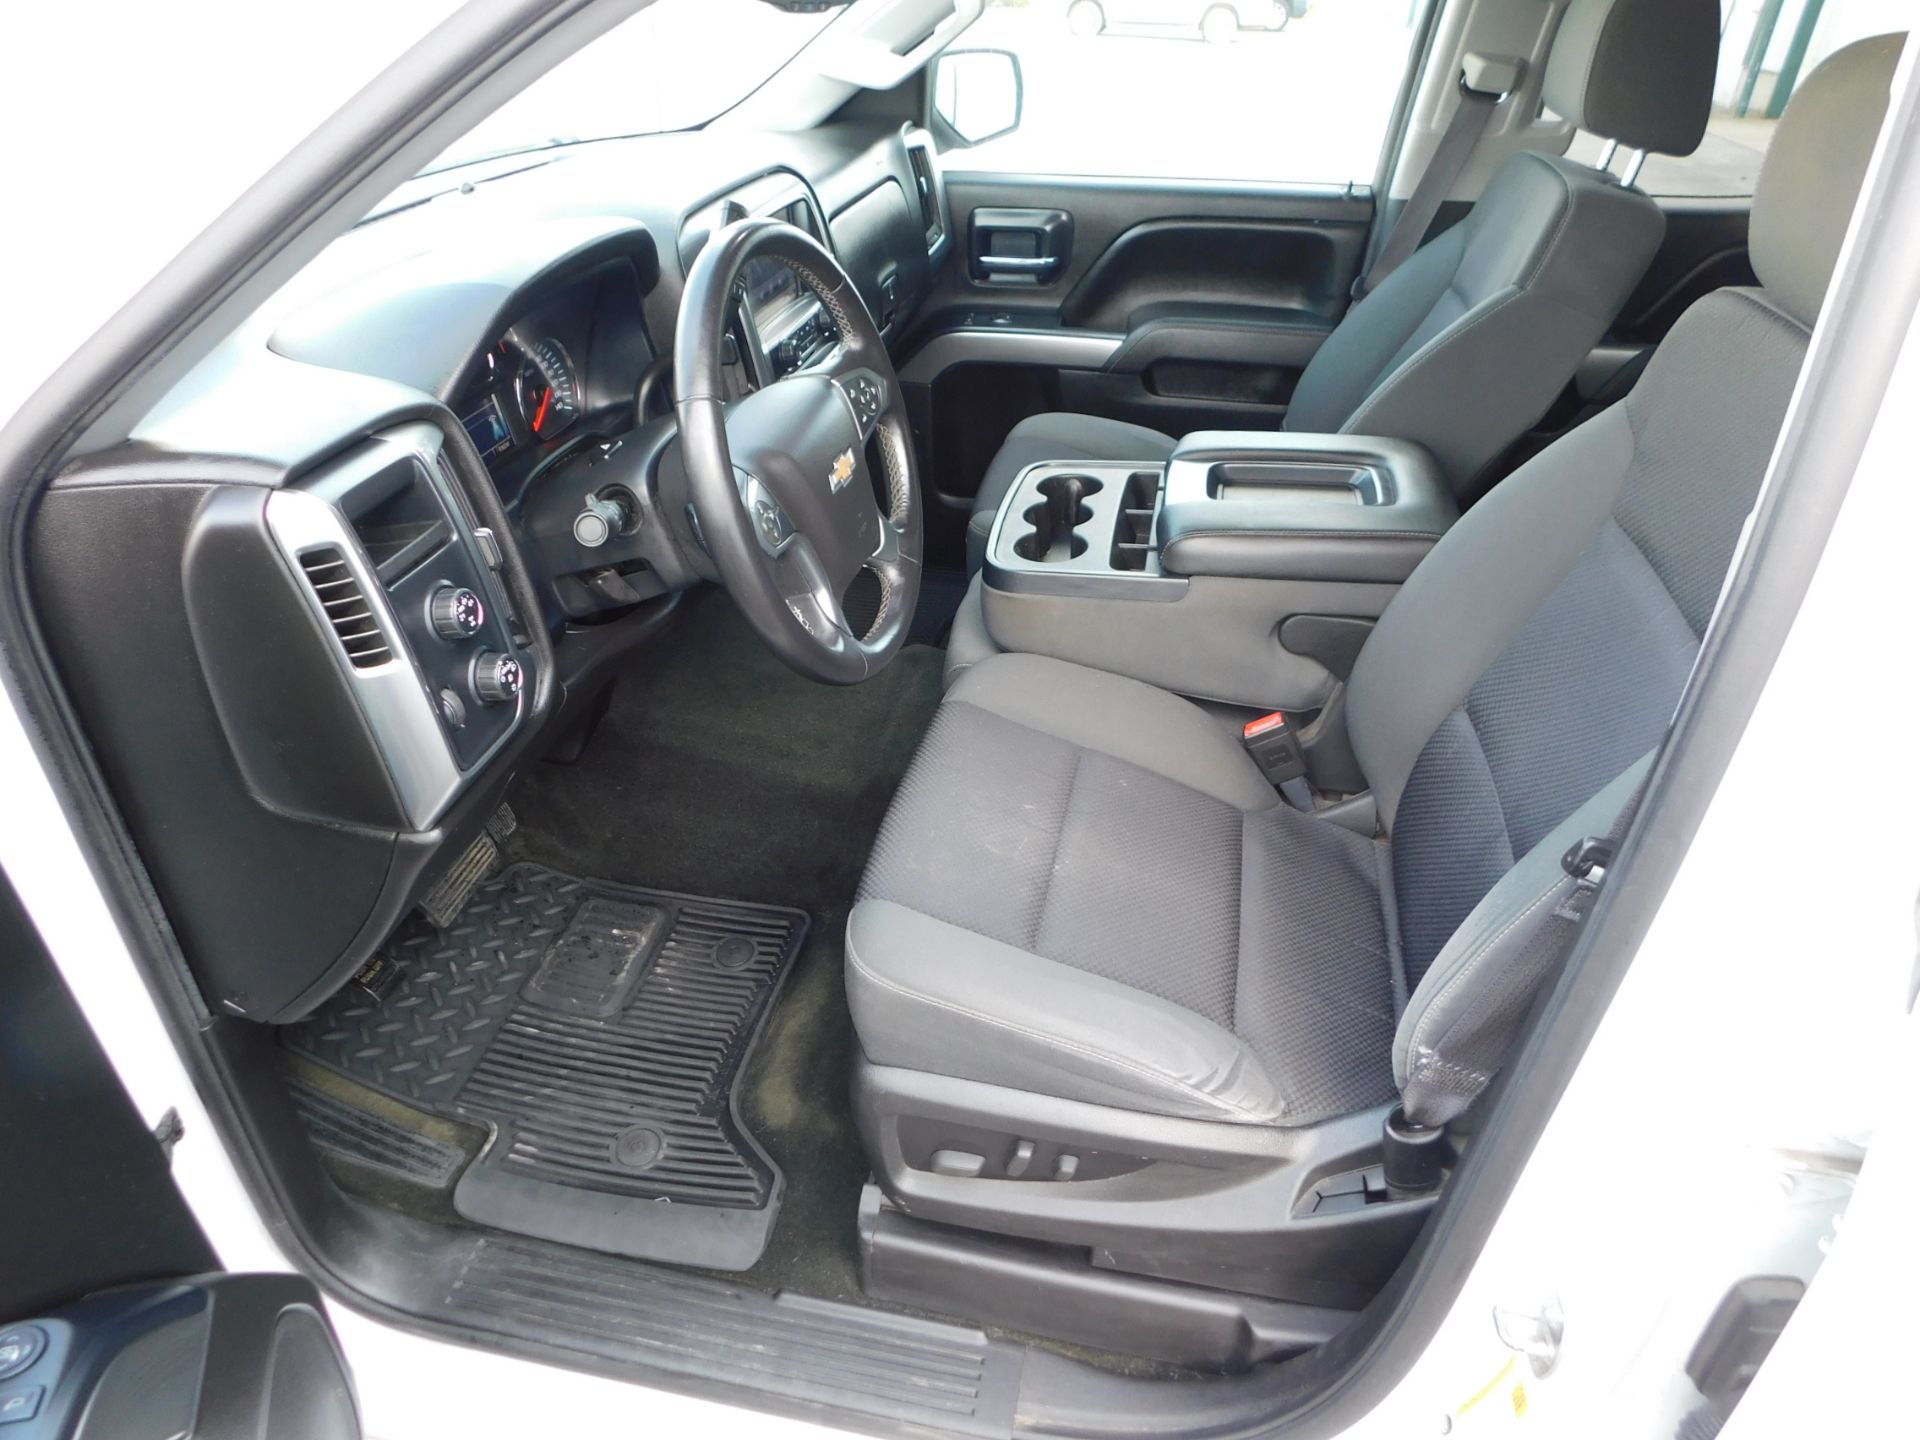 2014 Chevrolet Silverado LT Pickup, VIN 1GCVKREC3EZ139405, 4-Door 4 WD, Automatic, AM/FM, AC, Cruise - Image 24 of 51